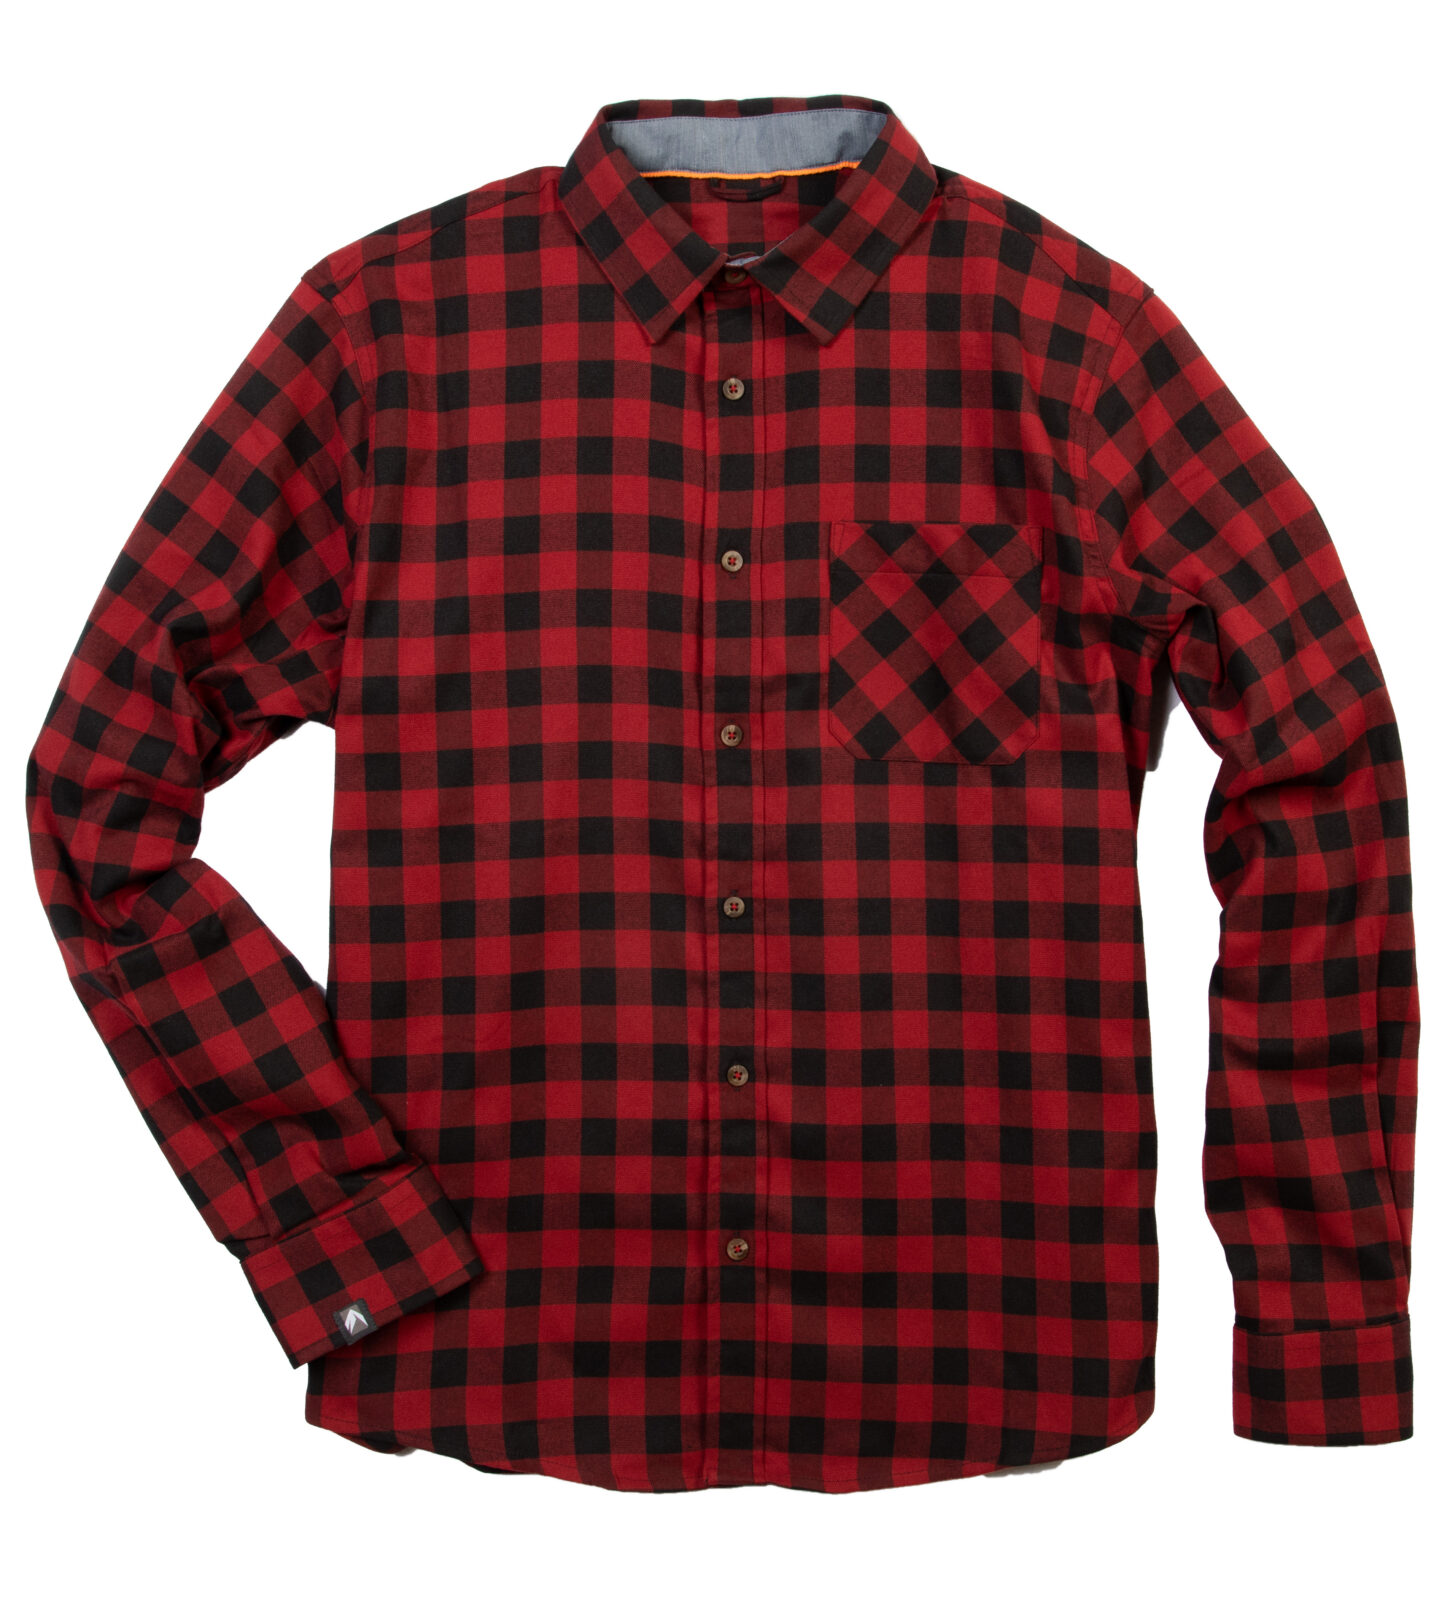 Storm Creek 2800 - Men's Stretch Woven Flannel Shirt 'Jack' $41.60